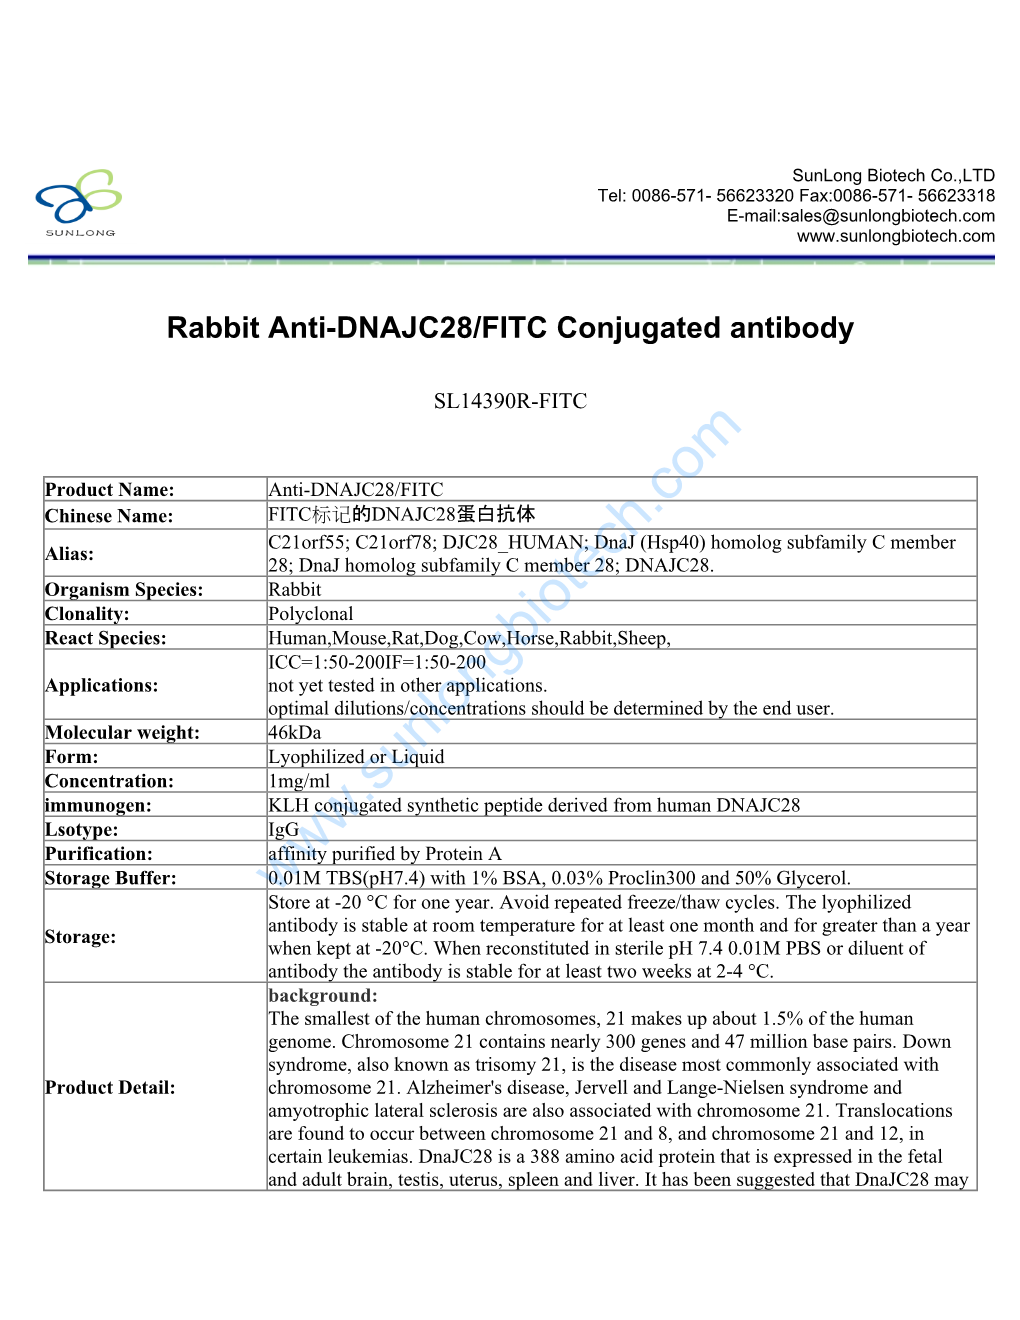 Rabbit Anti-DNAJC28/FITC Conjugated Antibody-SL14390R